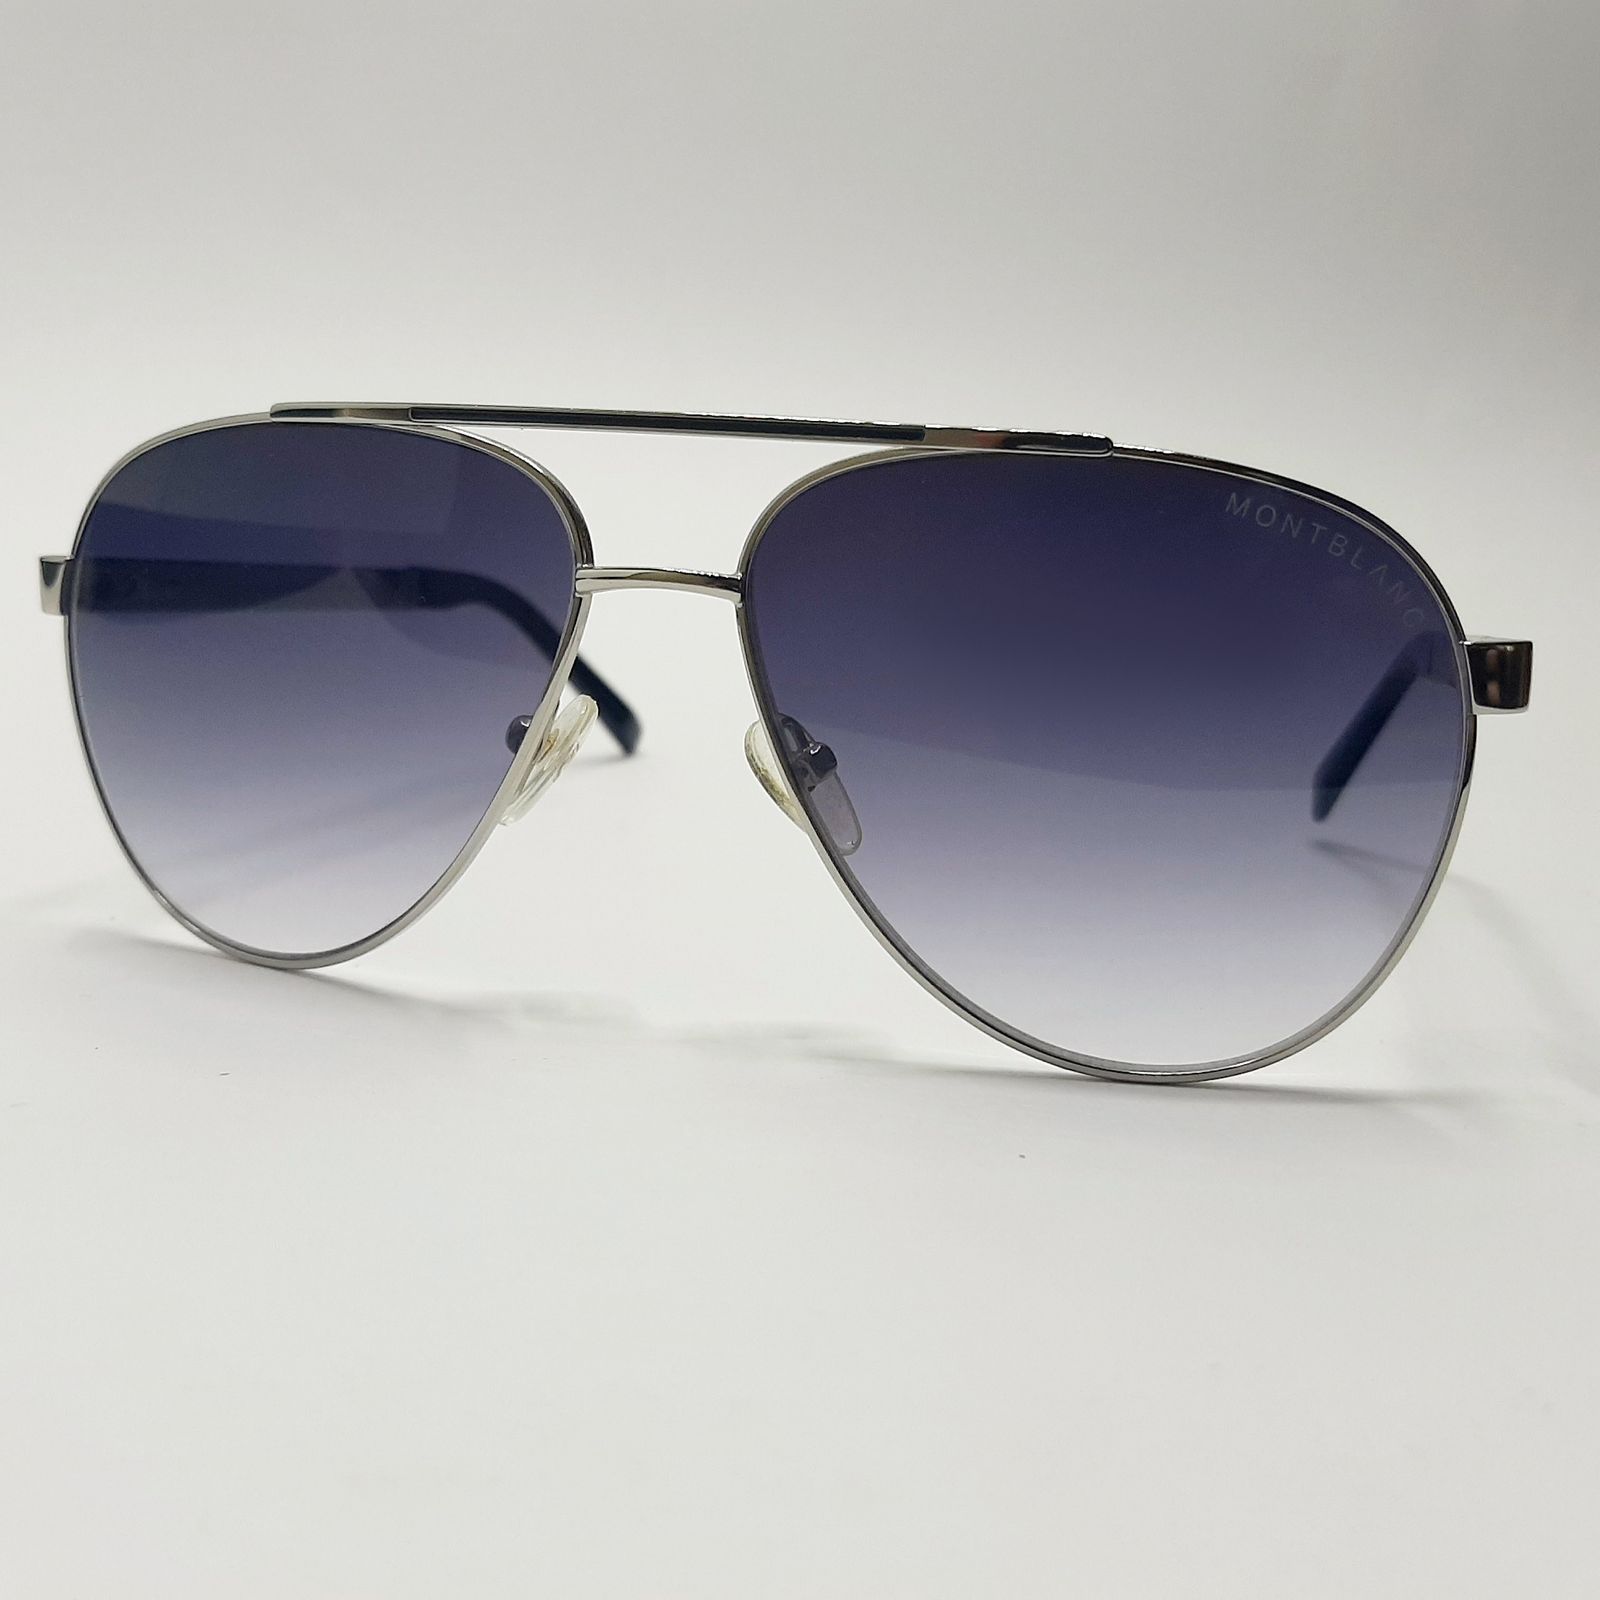 عینک آفتابی مون بلان مدل MB904c05 -  - 2